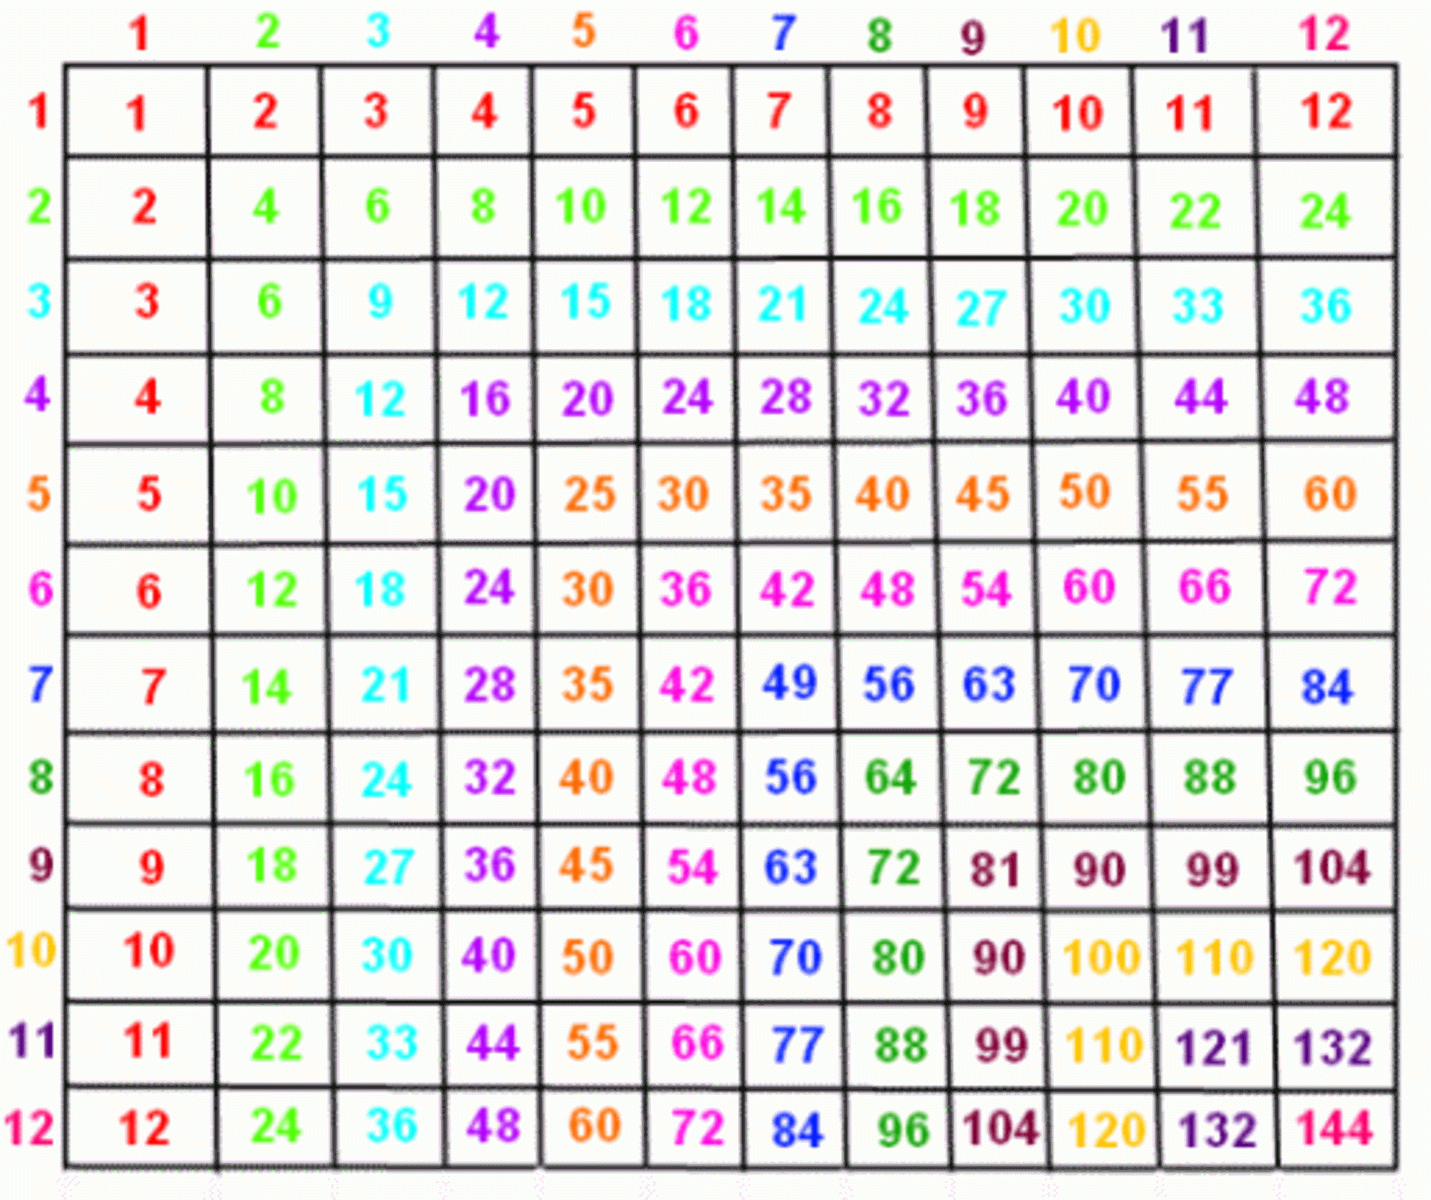 100 multiplication chart